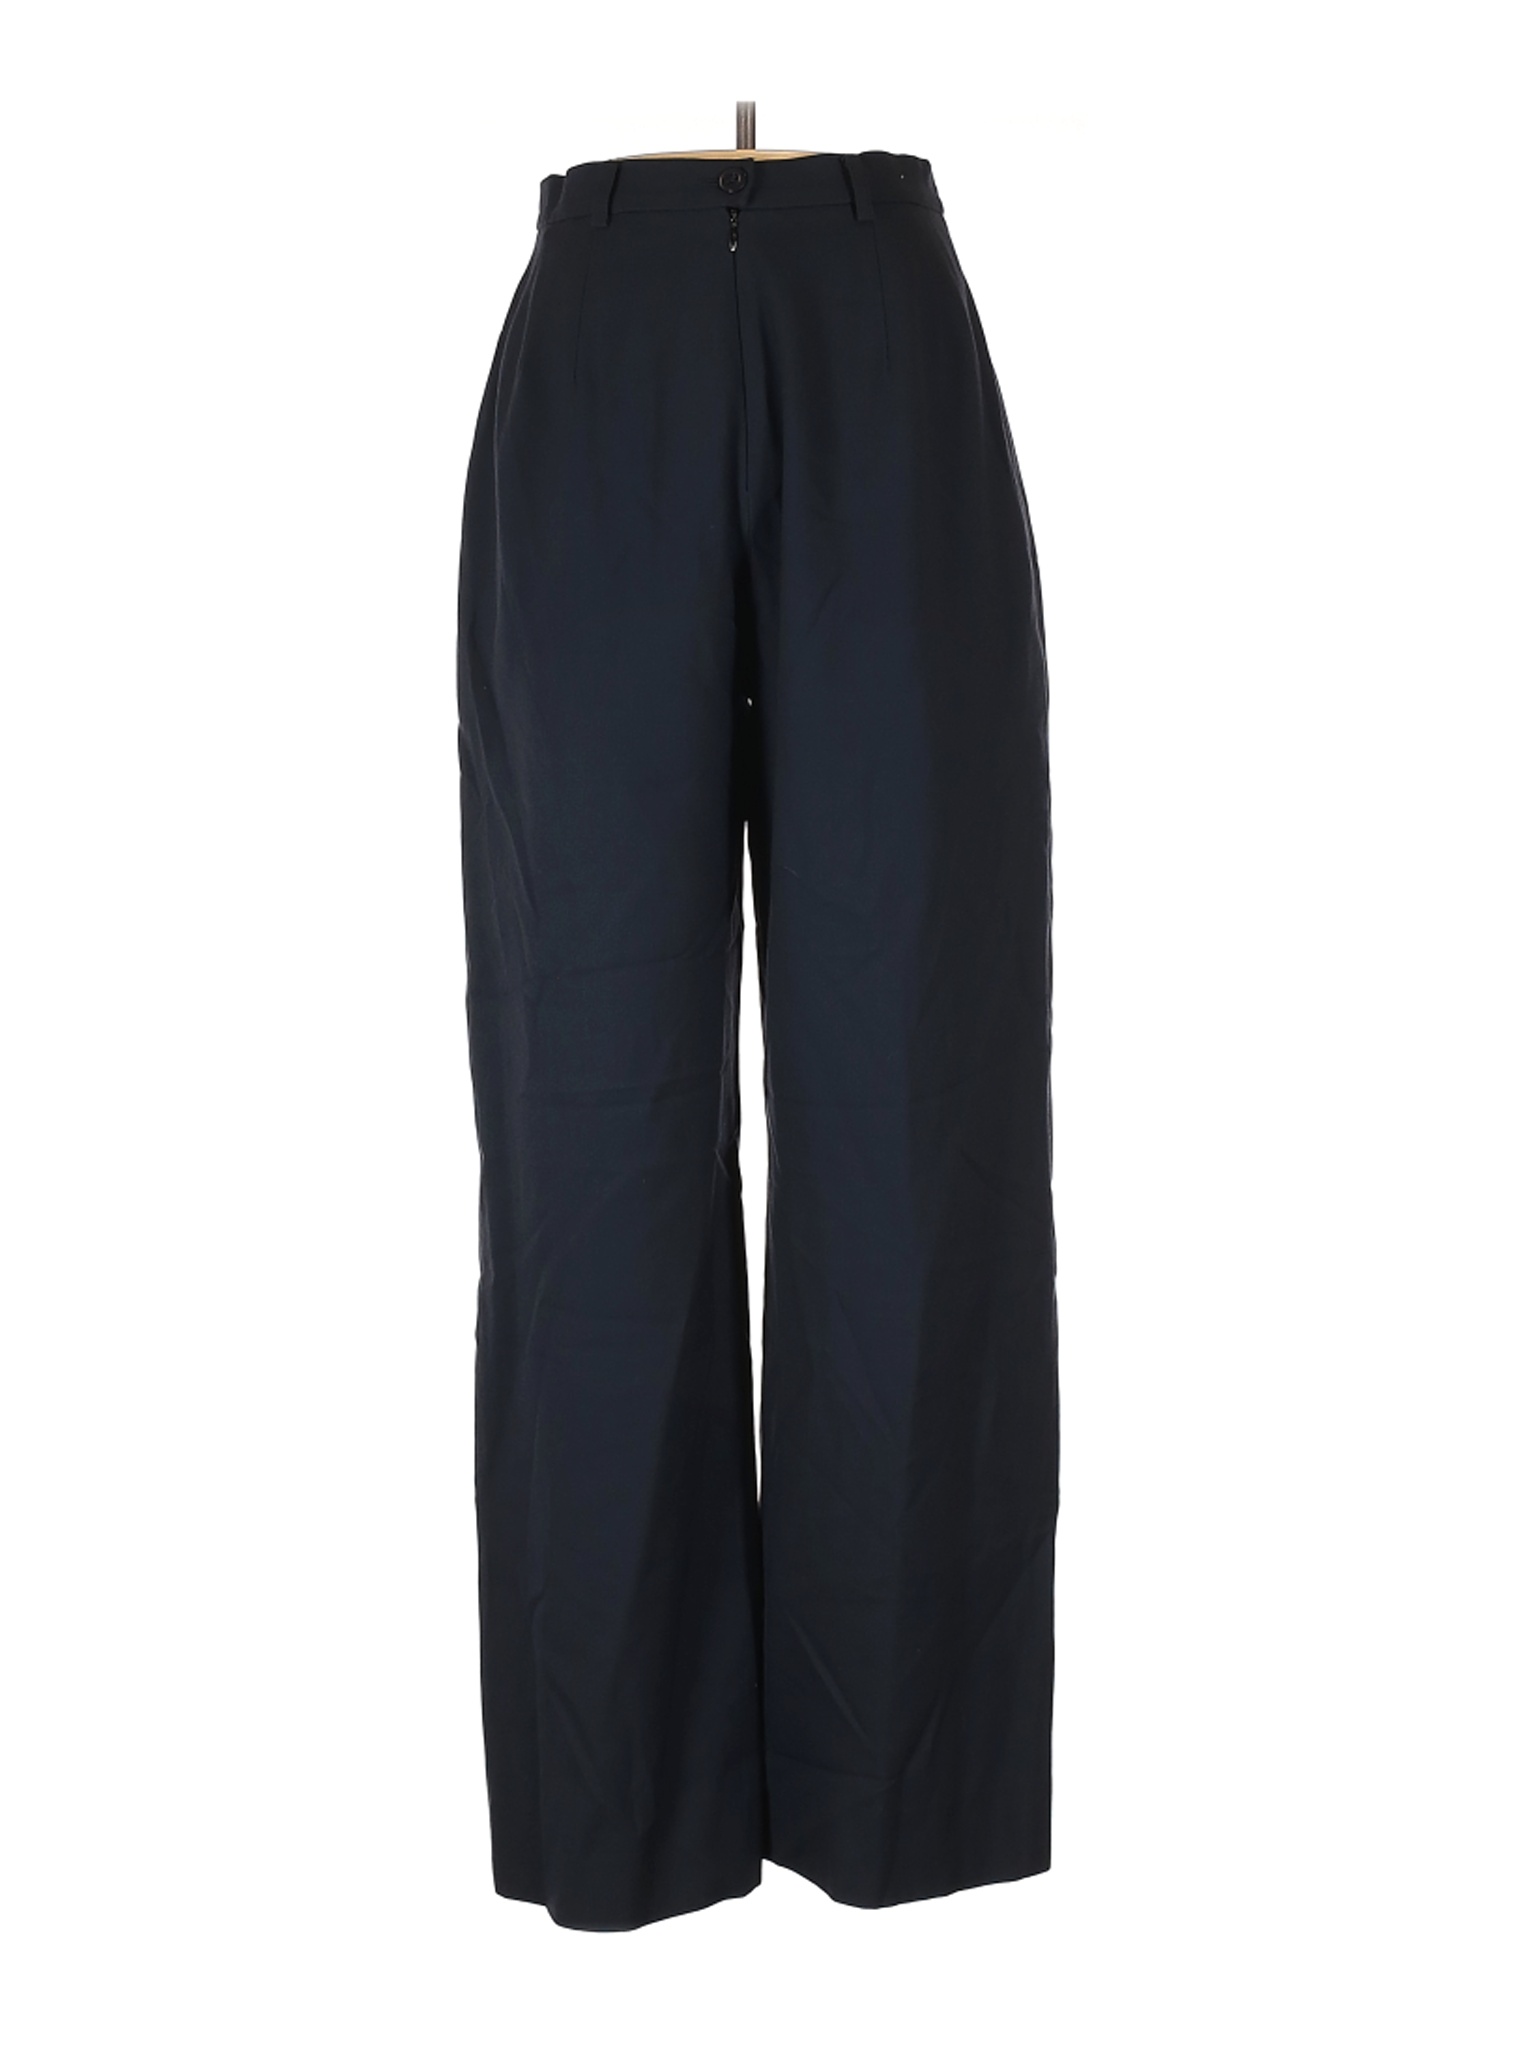 Greta Garbo Women Black Dress Pants 10 | eBay